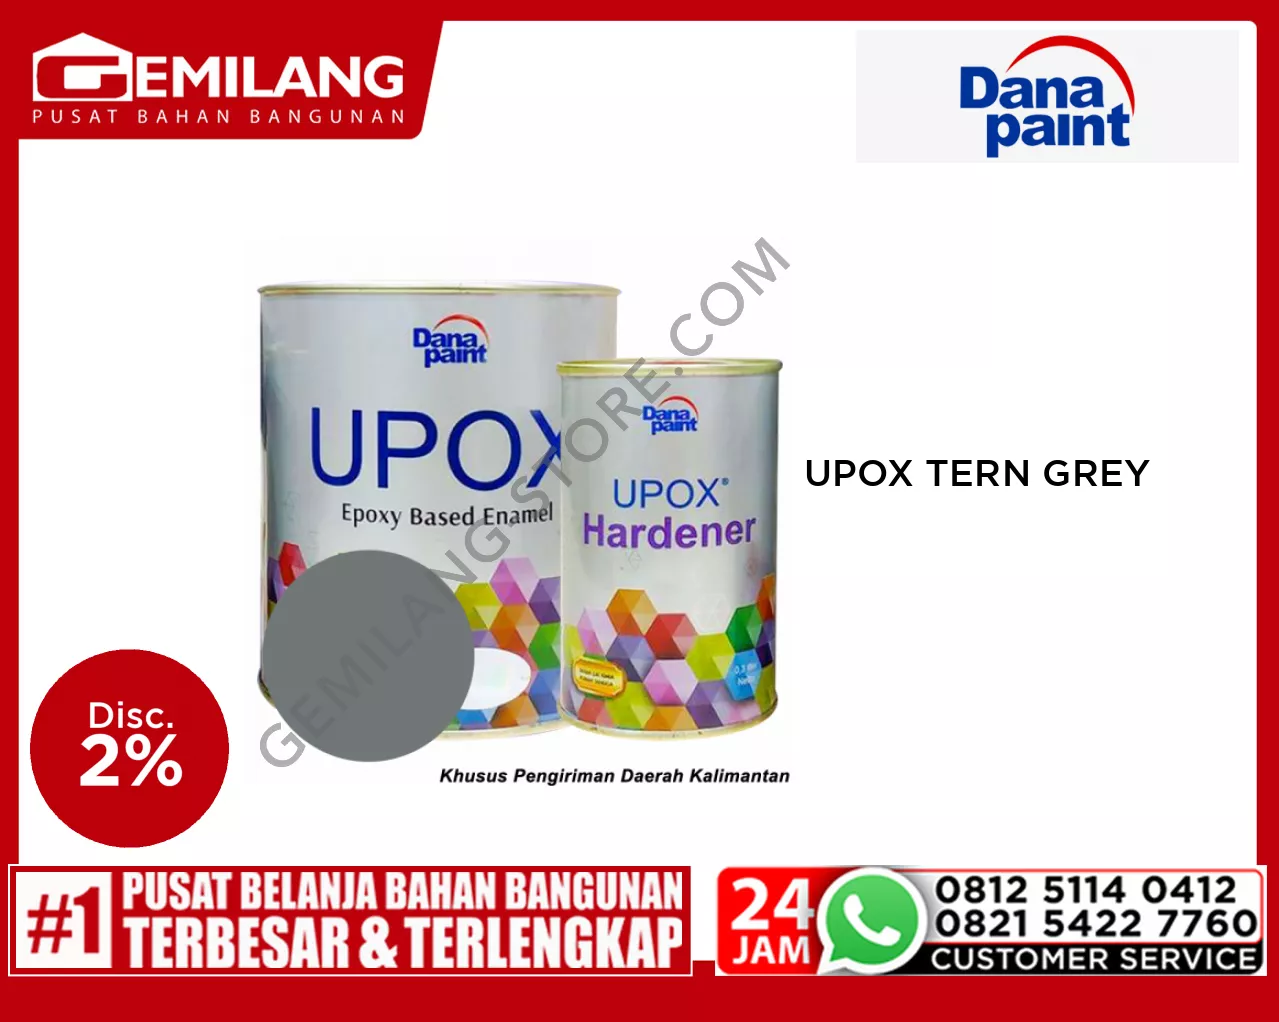 UPOX TERN GREY 0.9ltr